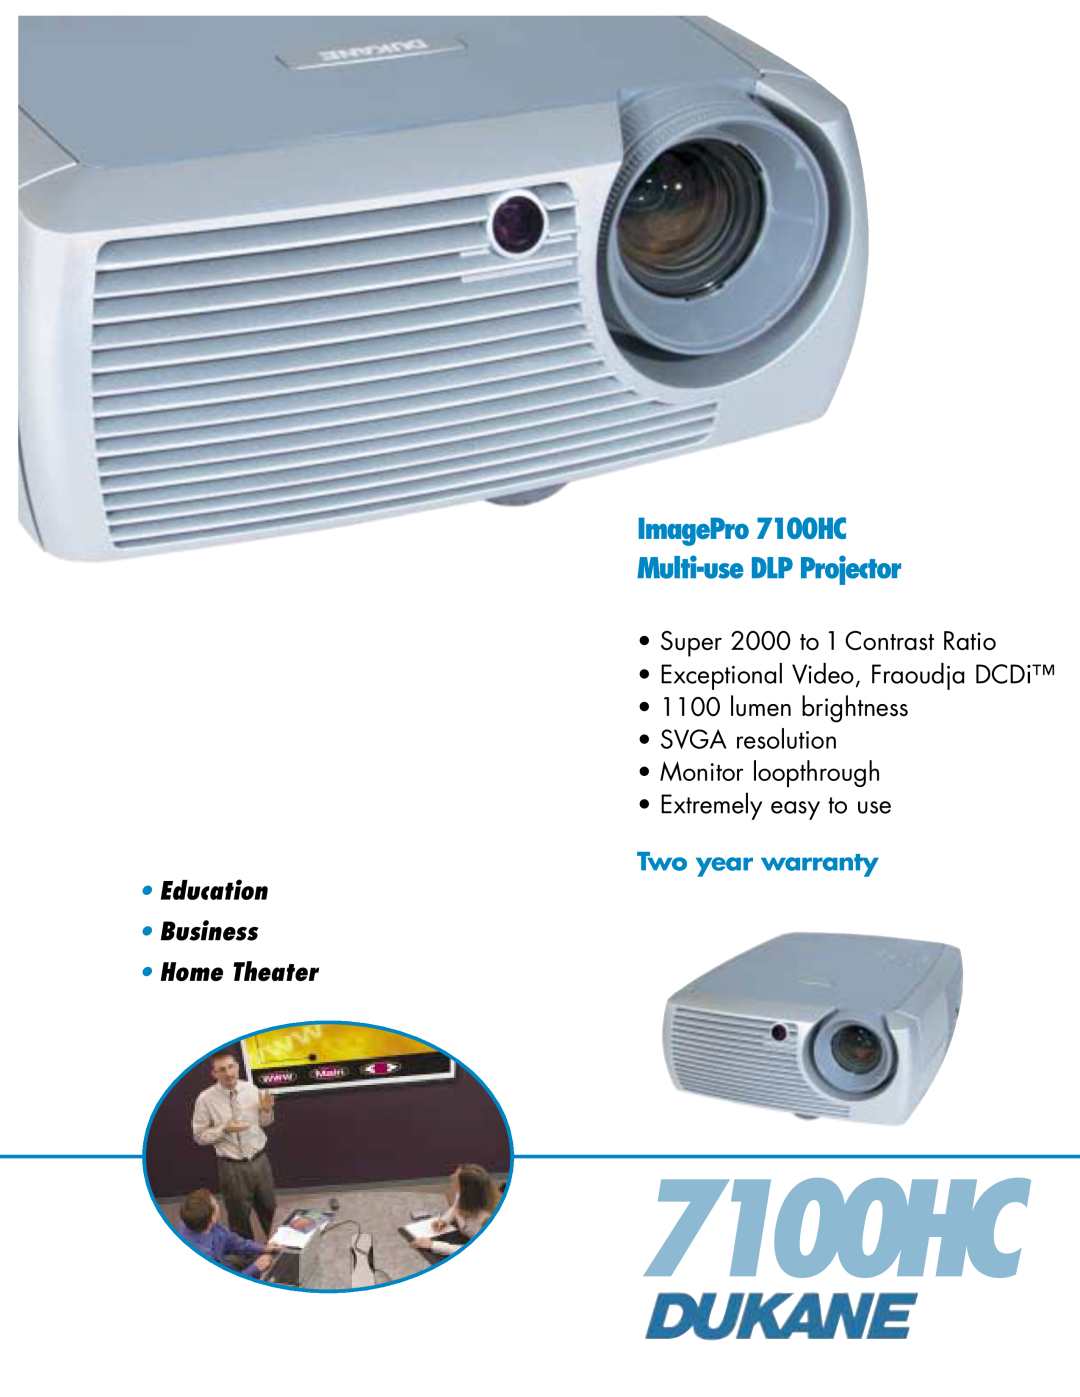 Dukane warranty ImagePro 7100HC Multi-use DLP Projector, lumen brightness SVGA resolution Monitor loopthrough 